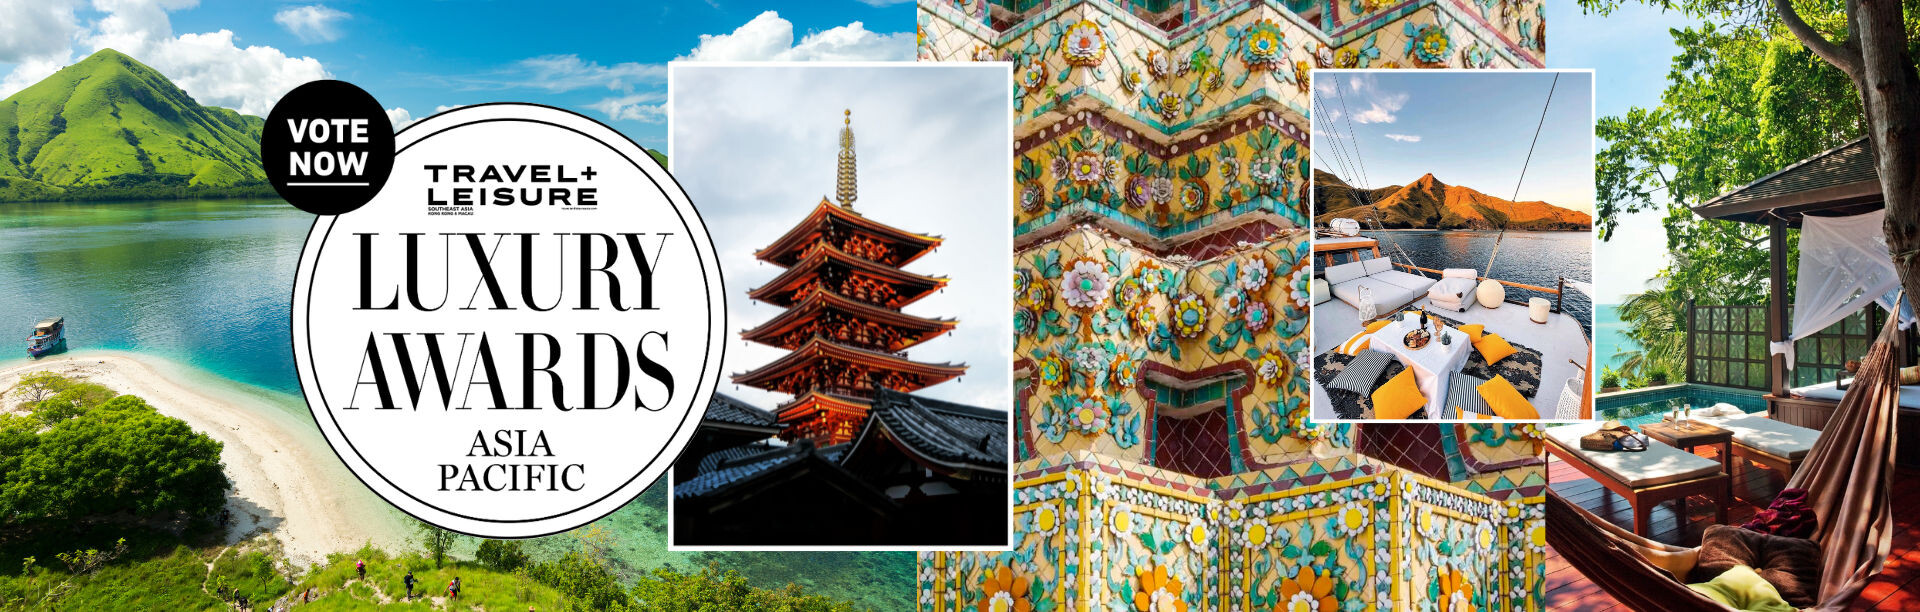 Travel + Leisure Southeast Asia, Hong Kong &amp; Macau เปิดตัวรางวัลล่าสุด "Luxury Awards Asia Pacific 2023" นำเสนอความเป็นเลิศในด้านการท่องเที่ยว